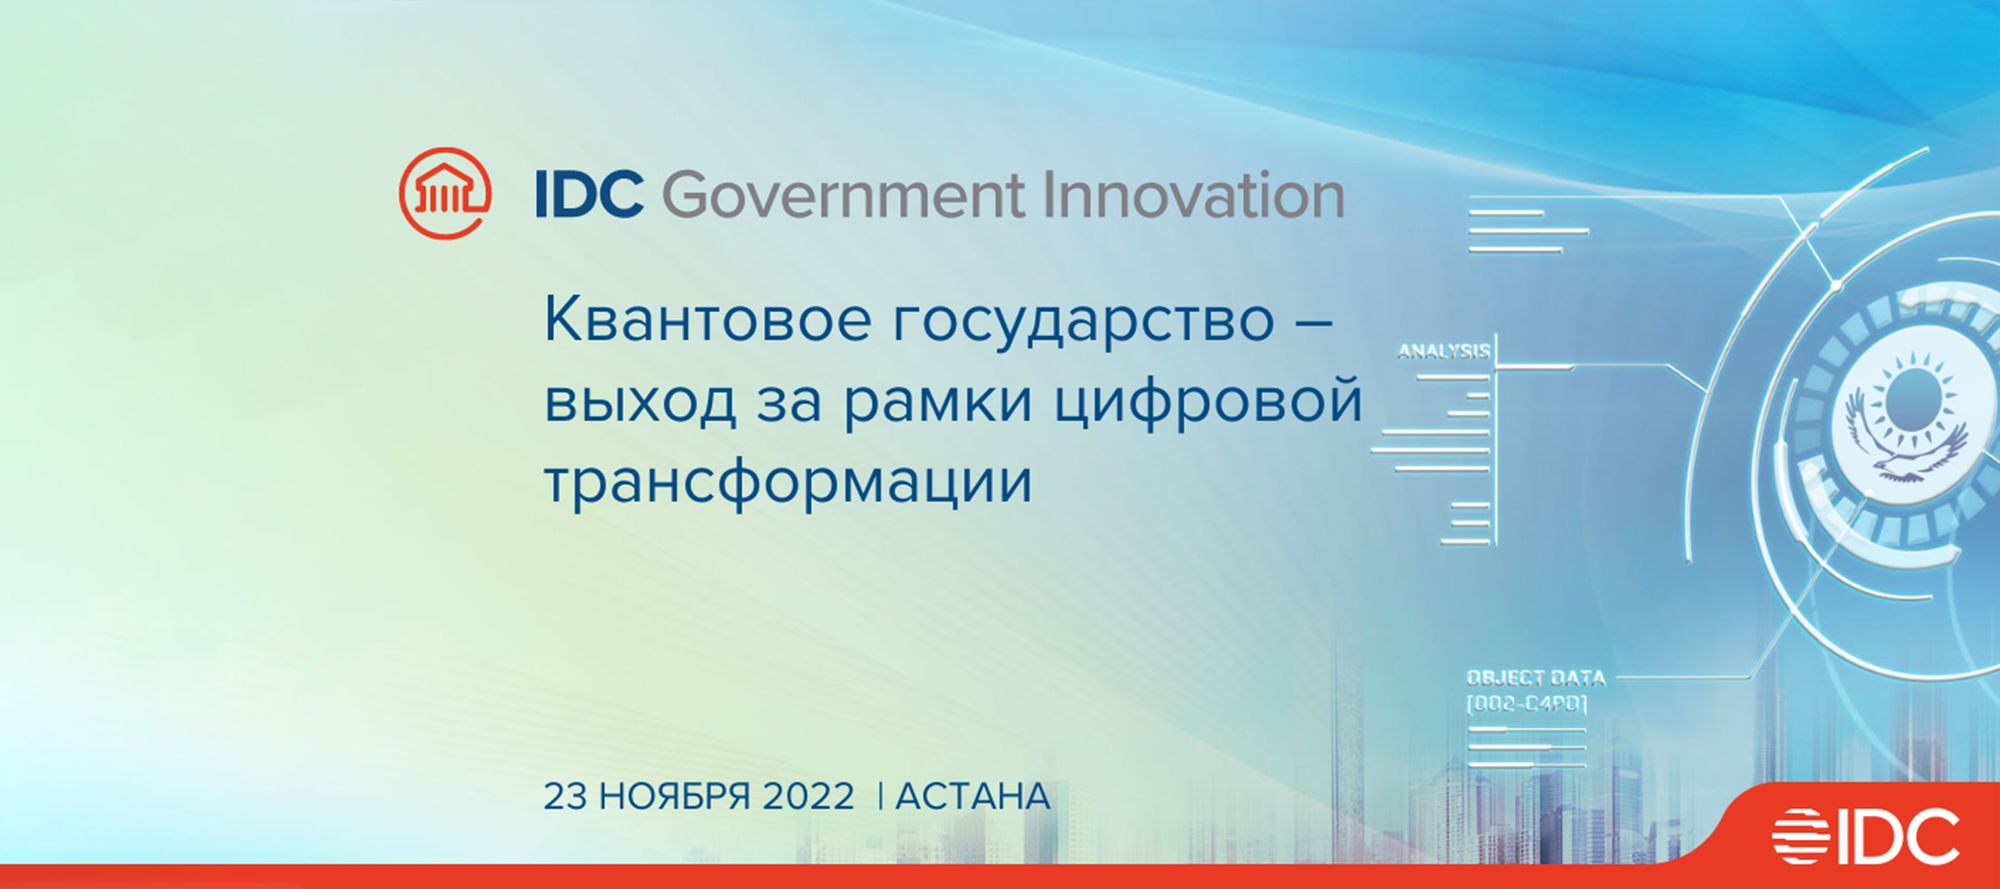 В Астане пройдет форум IDC Government Innovation 2022